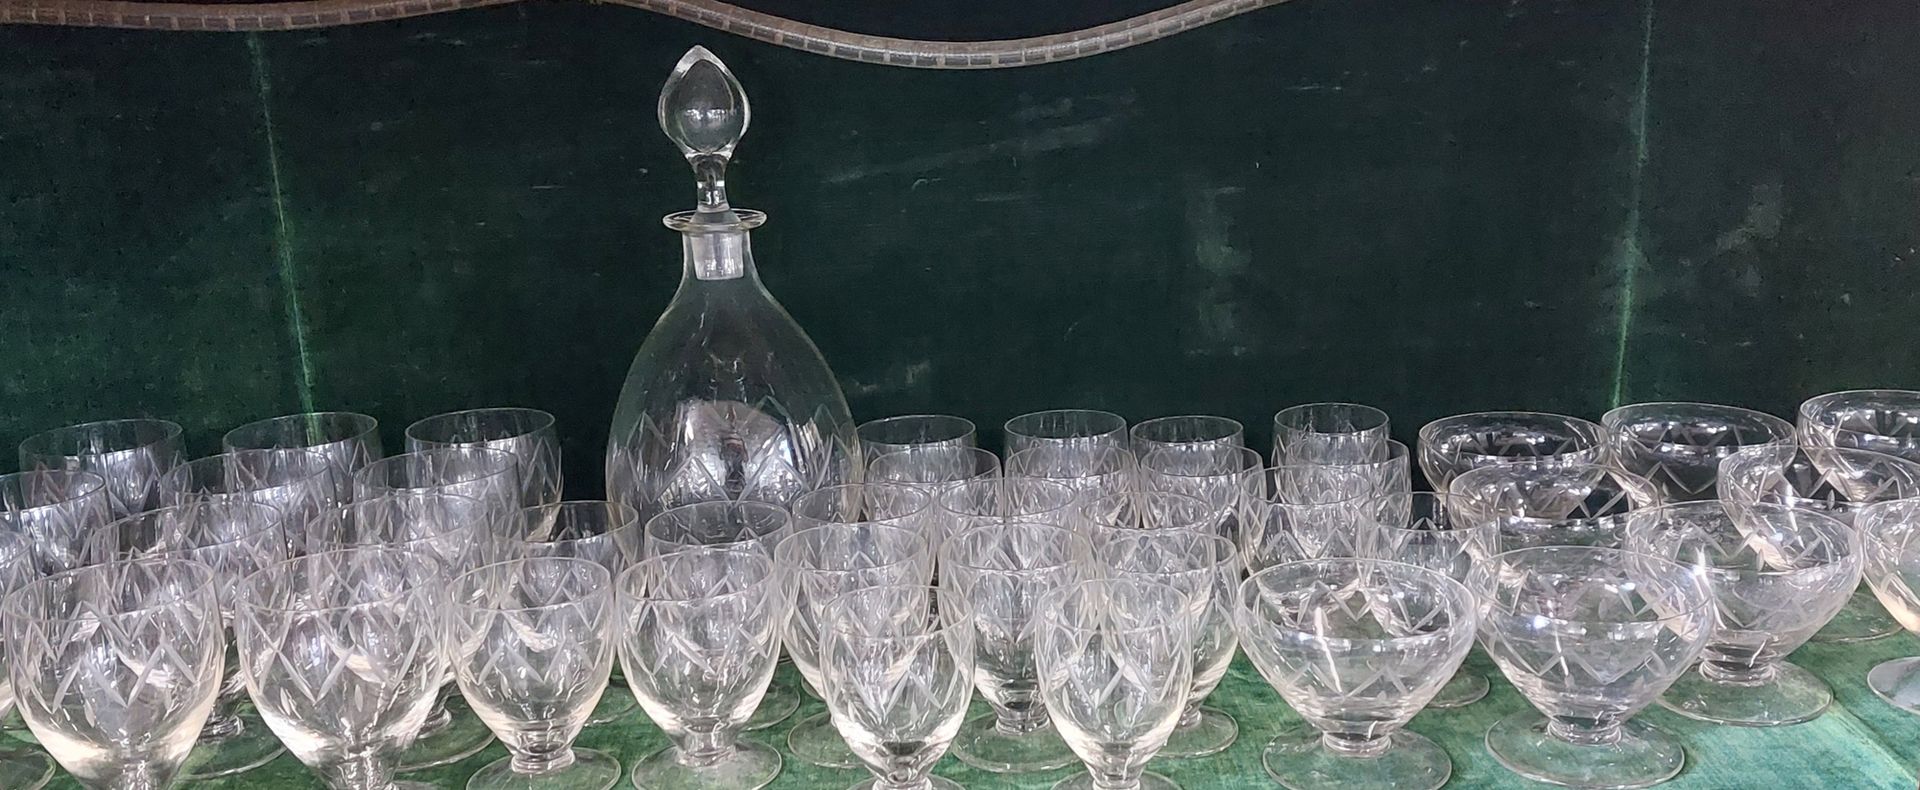 Null 水晶玻璃套装包括：

- 10个水杯

- 10只酒杯

- 10个开胃酒杯

- 10个香槟杯

- 1个酒杯